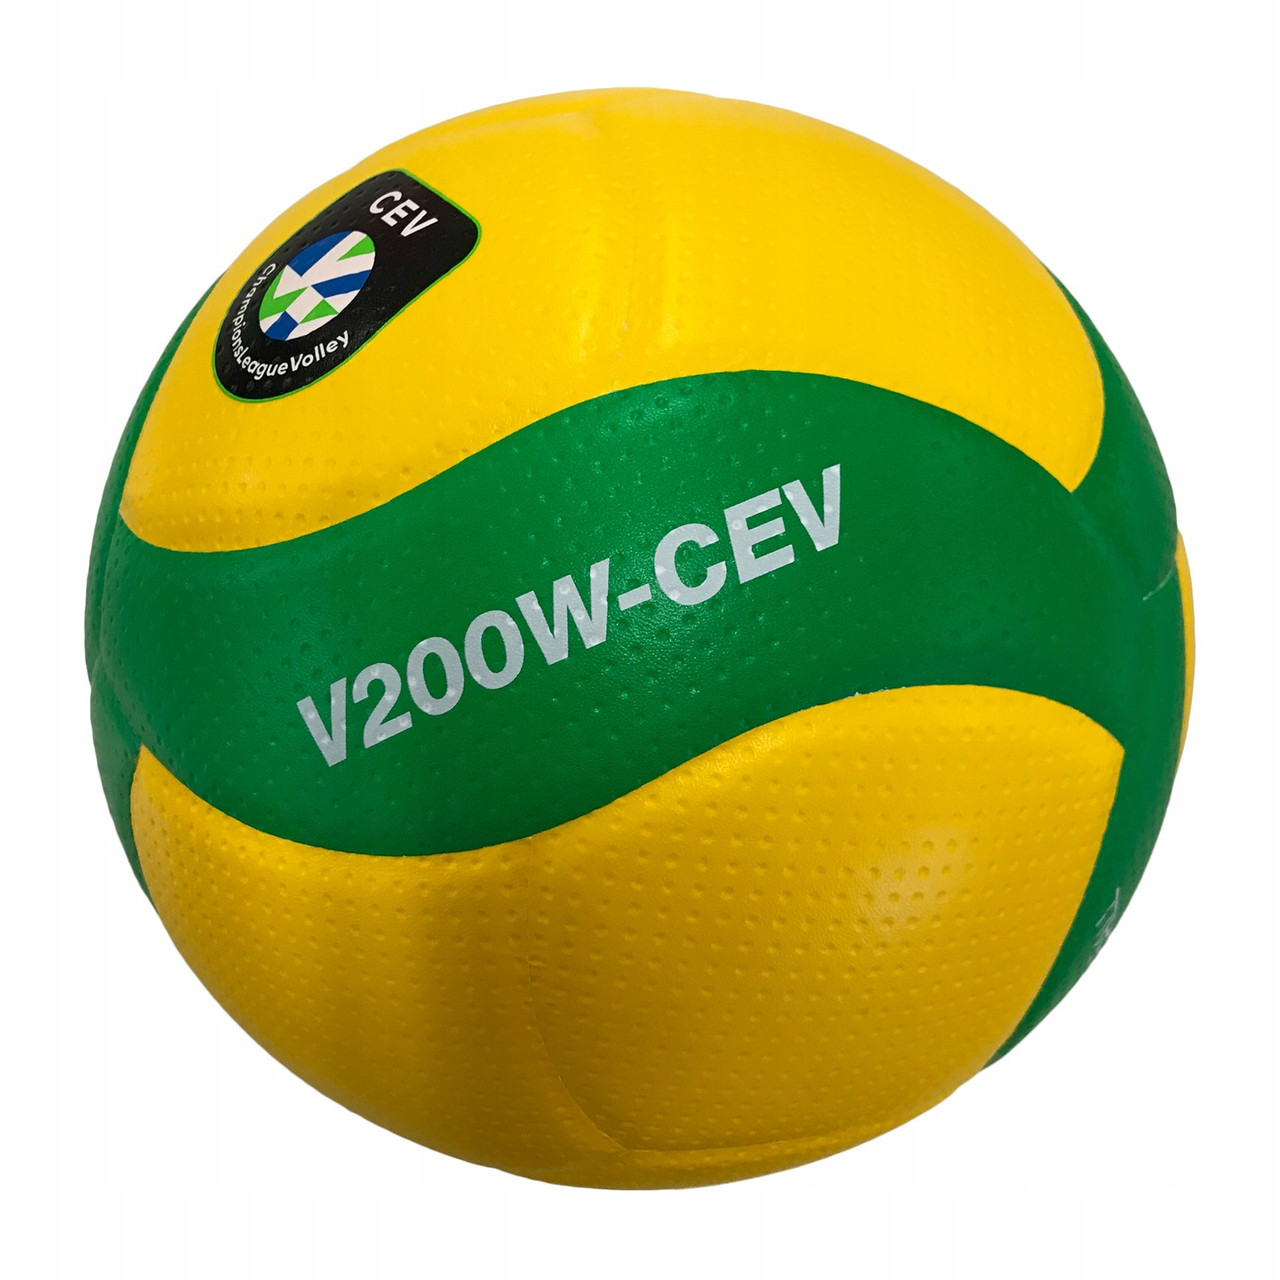 Мяч микаса оригинал. Мяч волейбольный Mikasa v200w. Мяч волейбольный Mikasa v300w. Волейбольный мяч Микаса v200w. Мяч волейбольный Mikasa v200w, 5 размер.